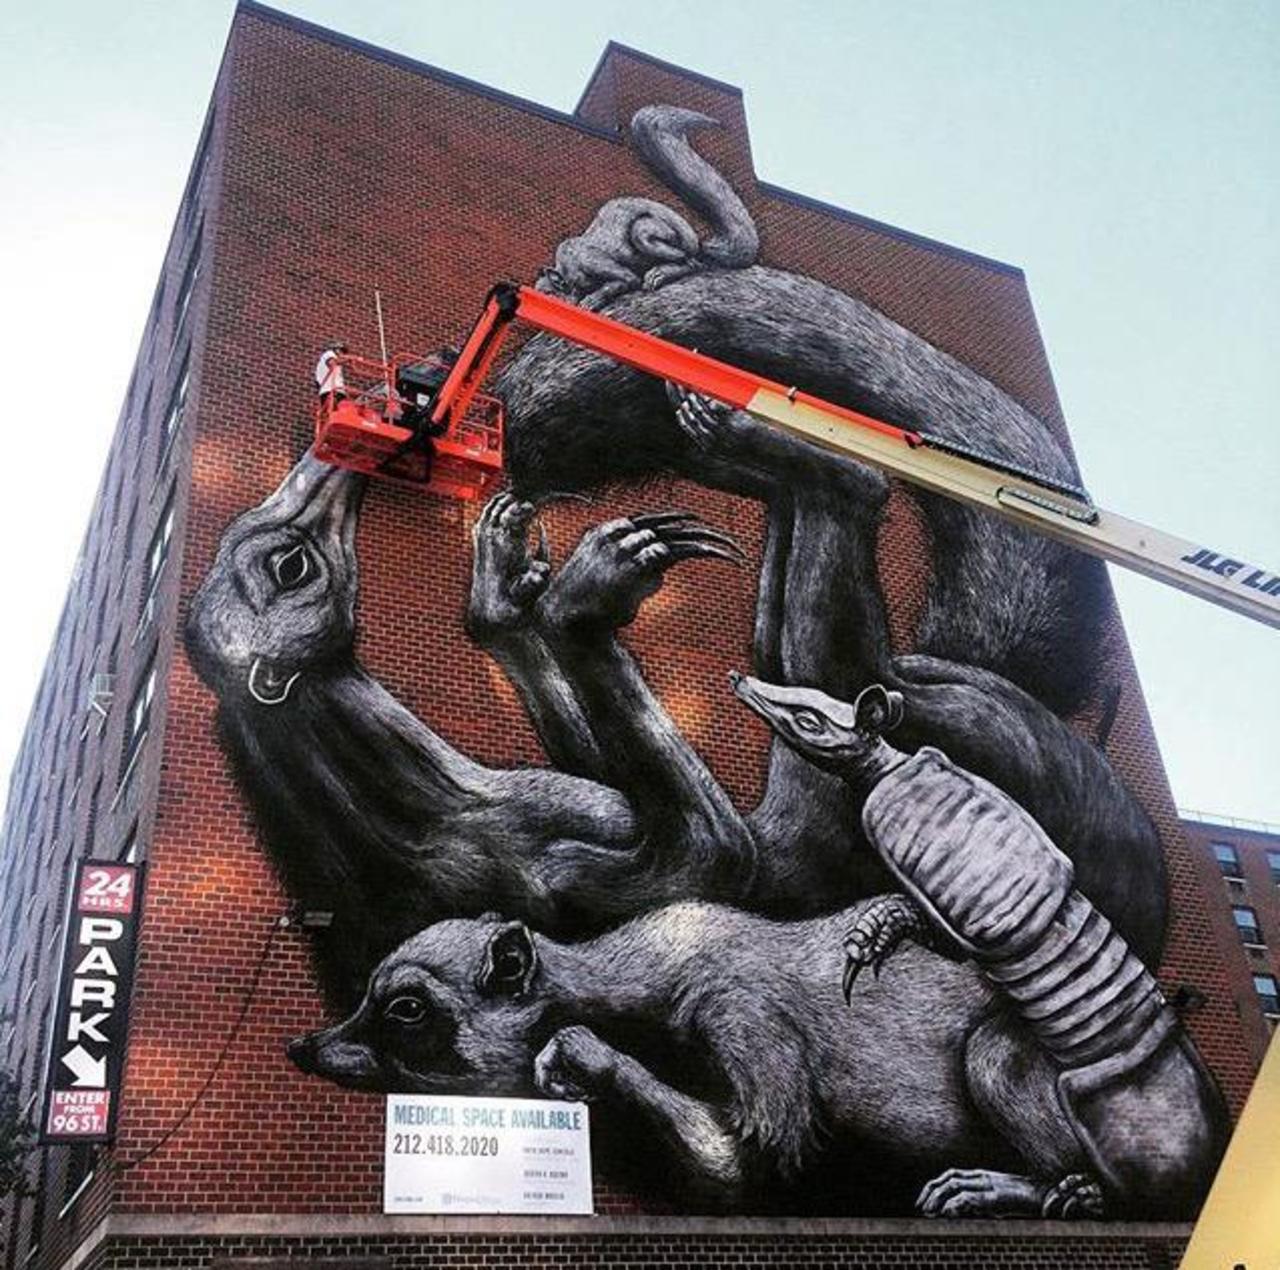 New tumblr post: "New tumblr post: "Street Art in progress by ROA in NYC

#art #graffiti #mural #streetart http://t.co/gdEUPjlftE" …